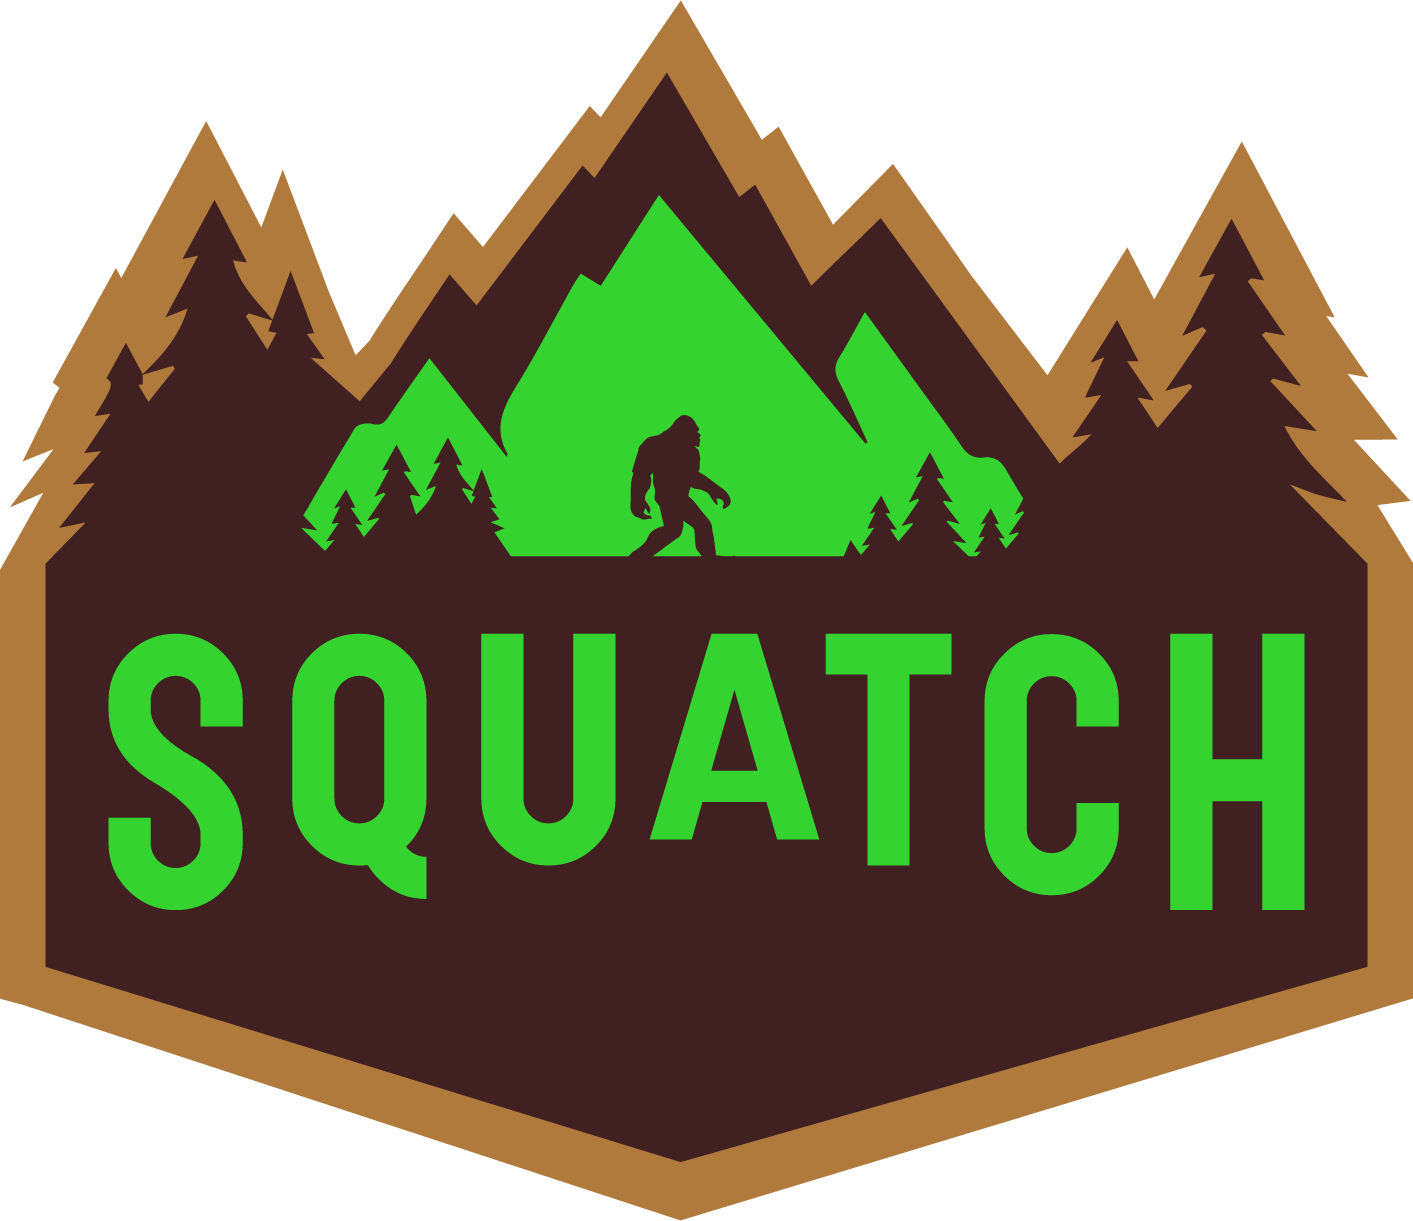 The Squatch Brand